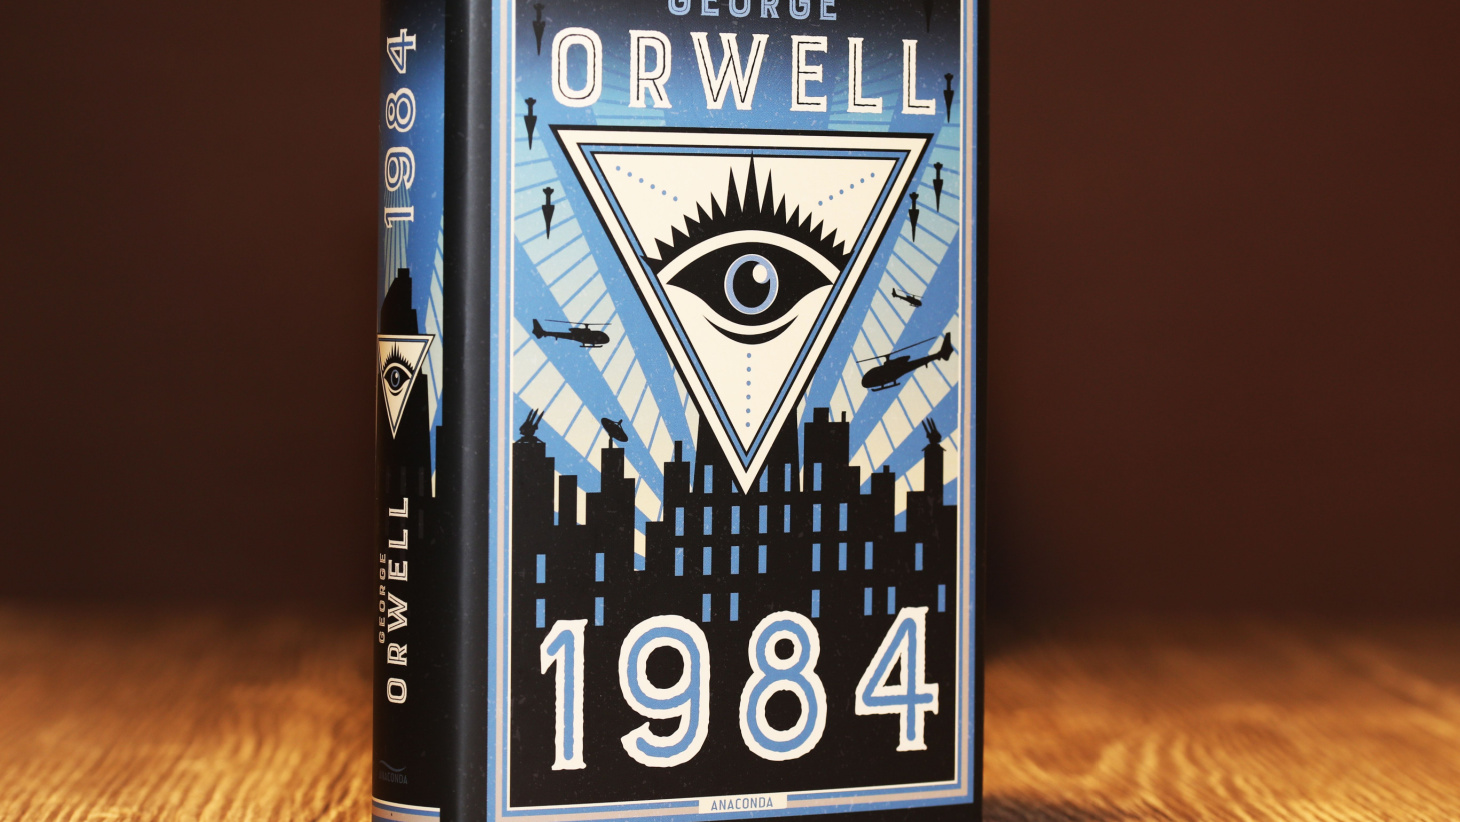 1984 book summary orwell